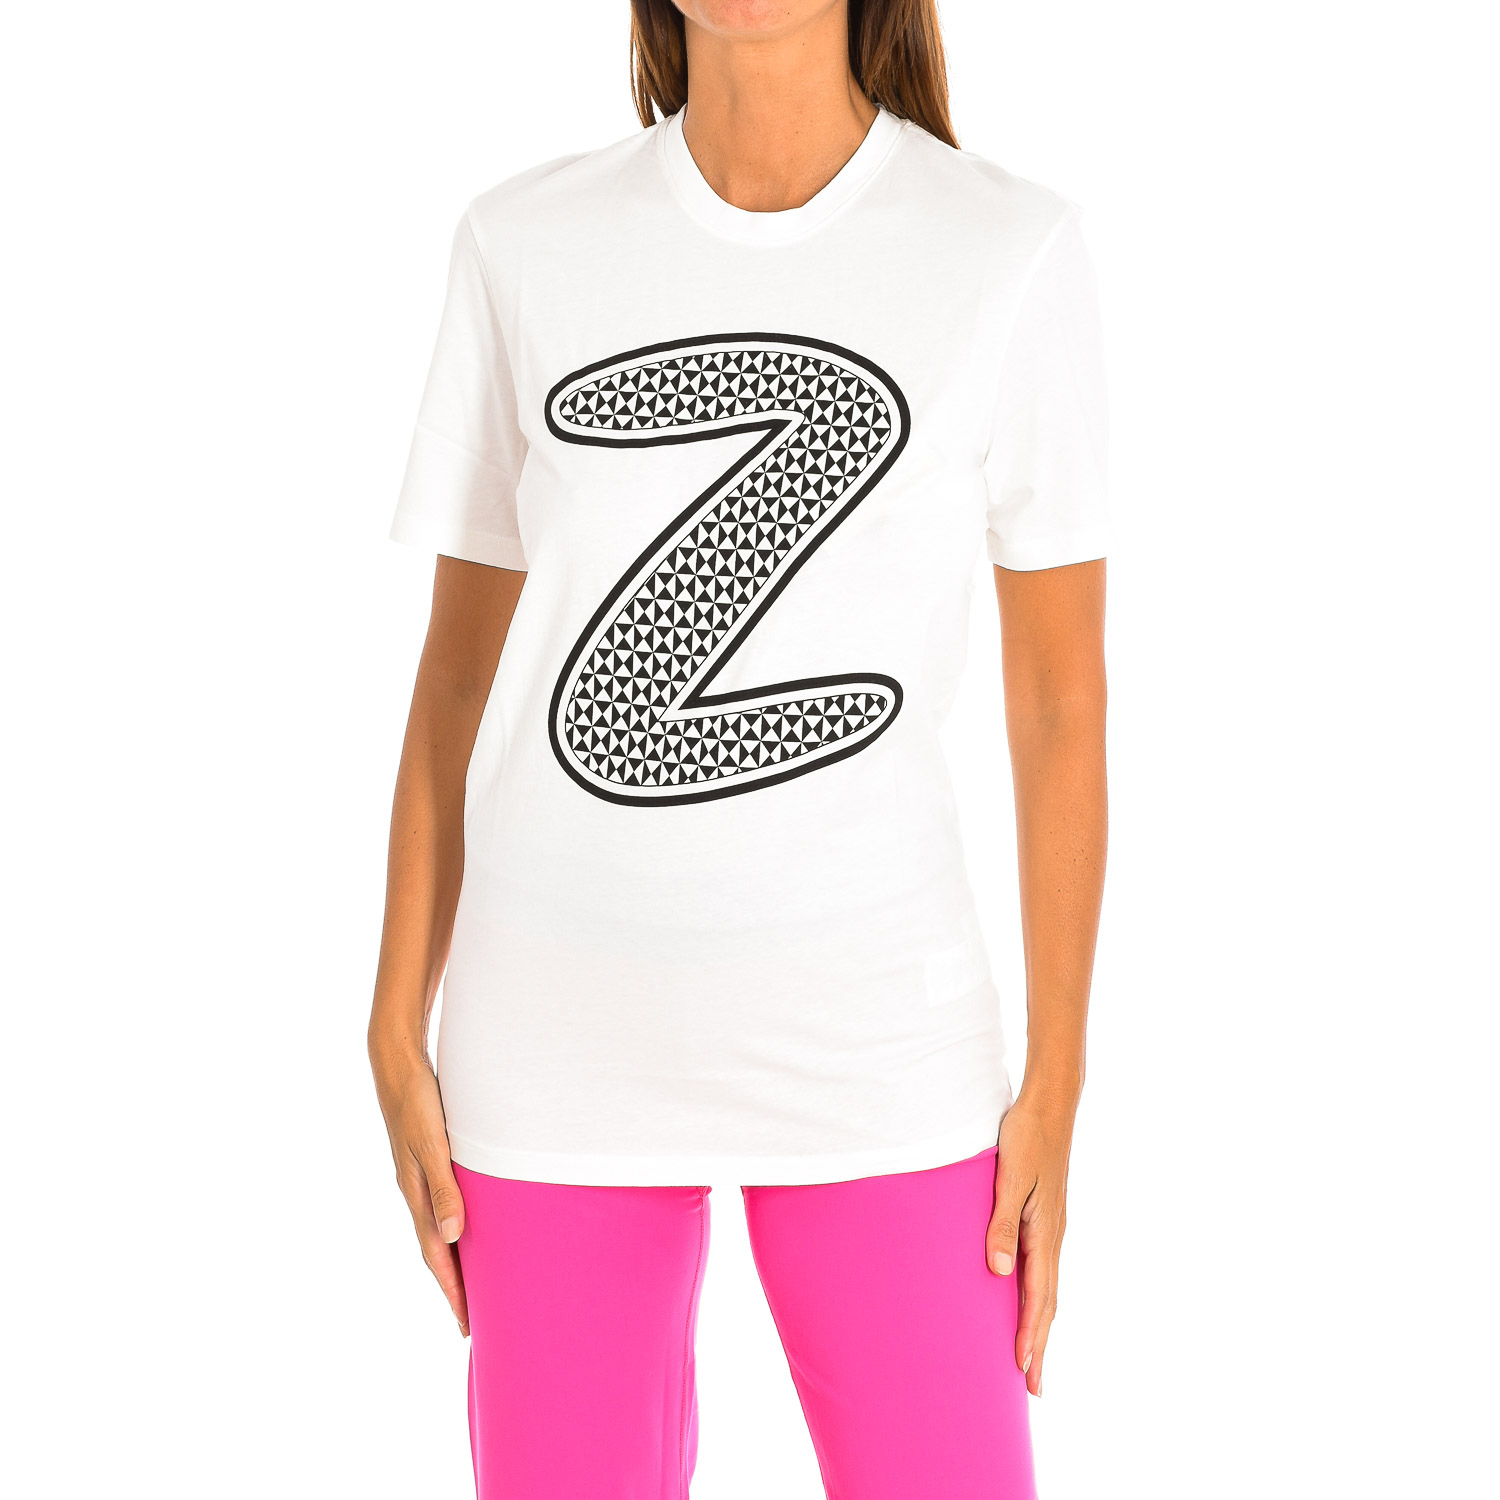 Camiseta Deportiva Zumba Z2t00164  MKP